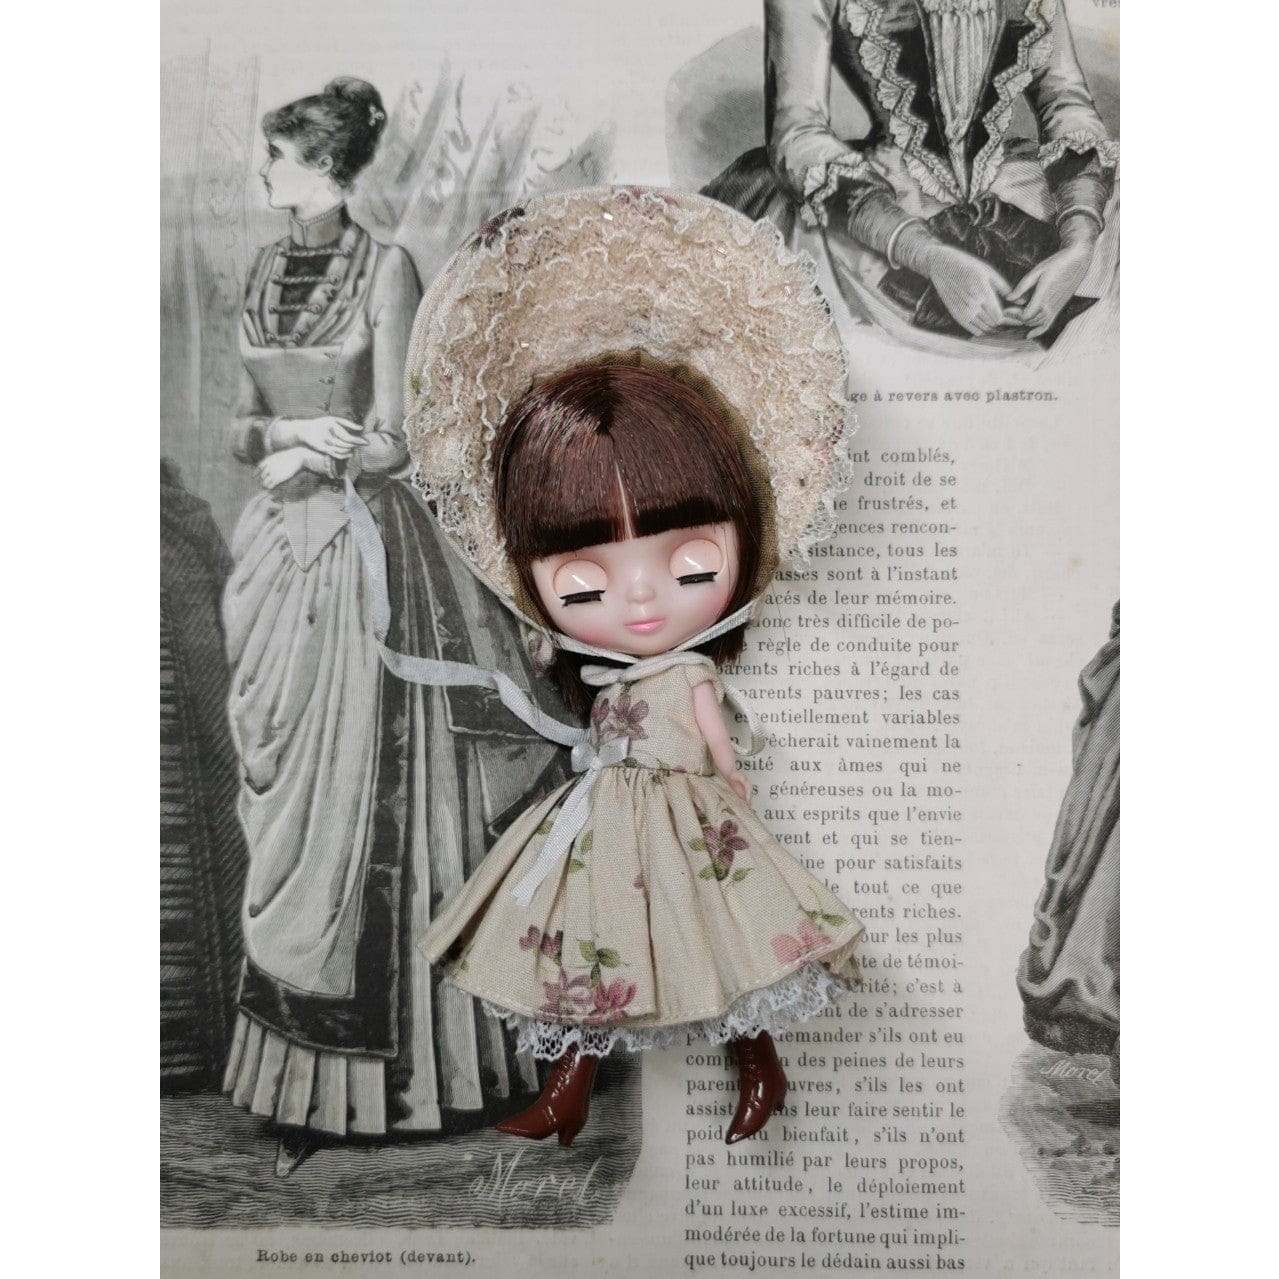 【Yenyumom】Beige Florals Dress Set / Petite Blythe